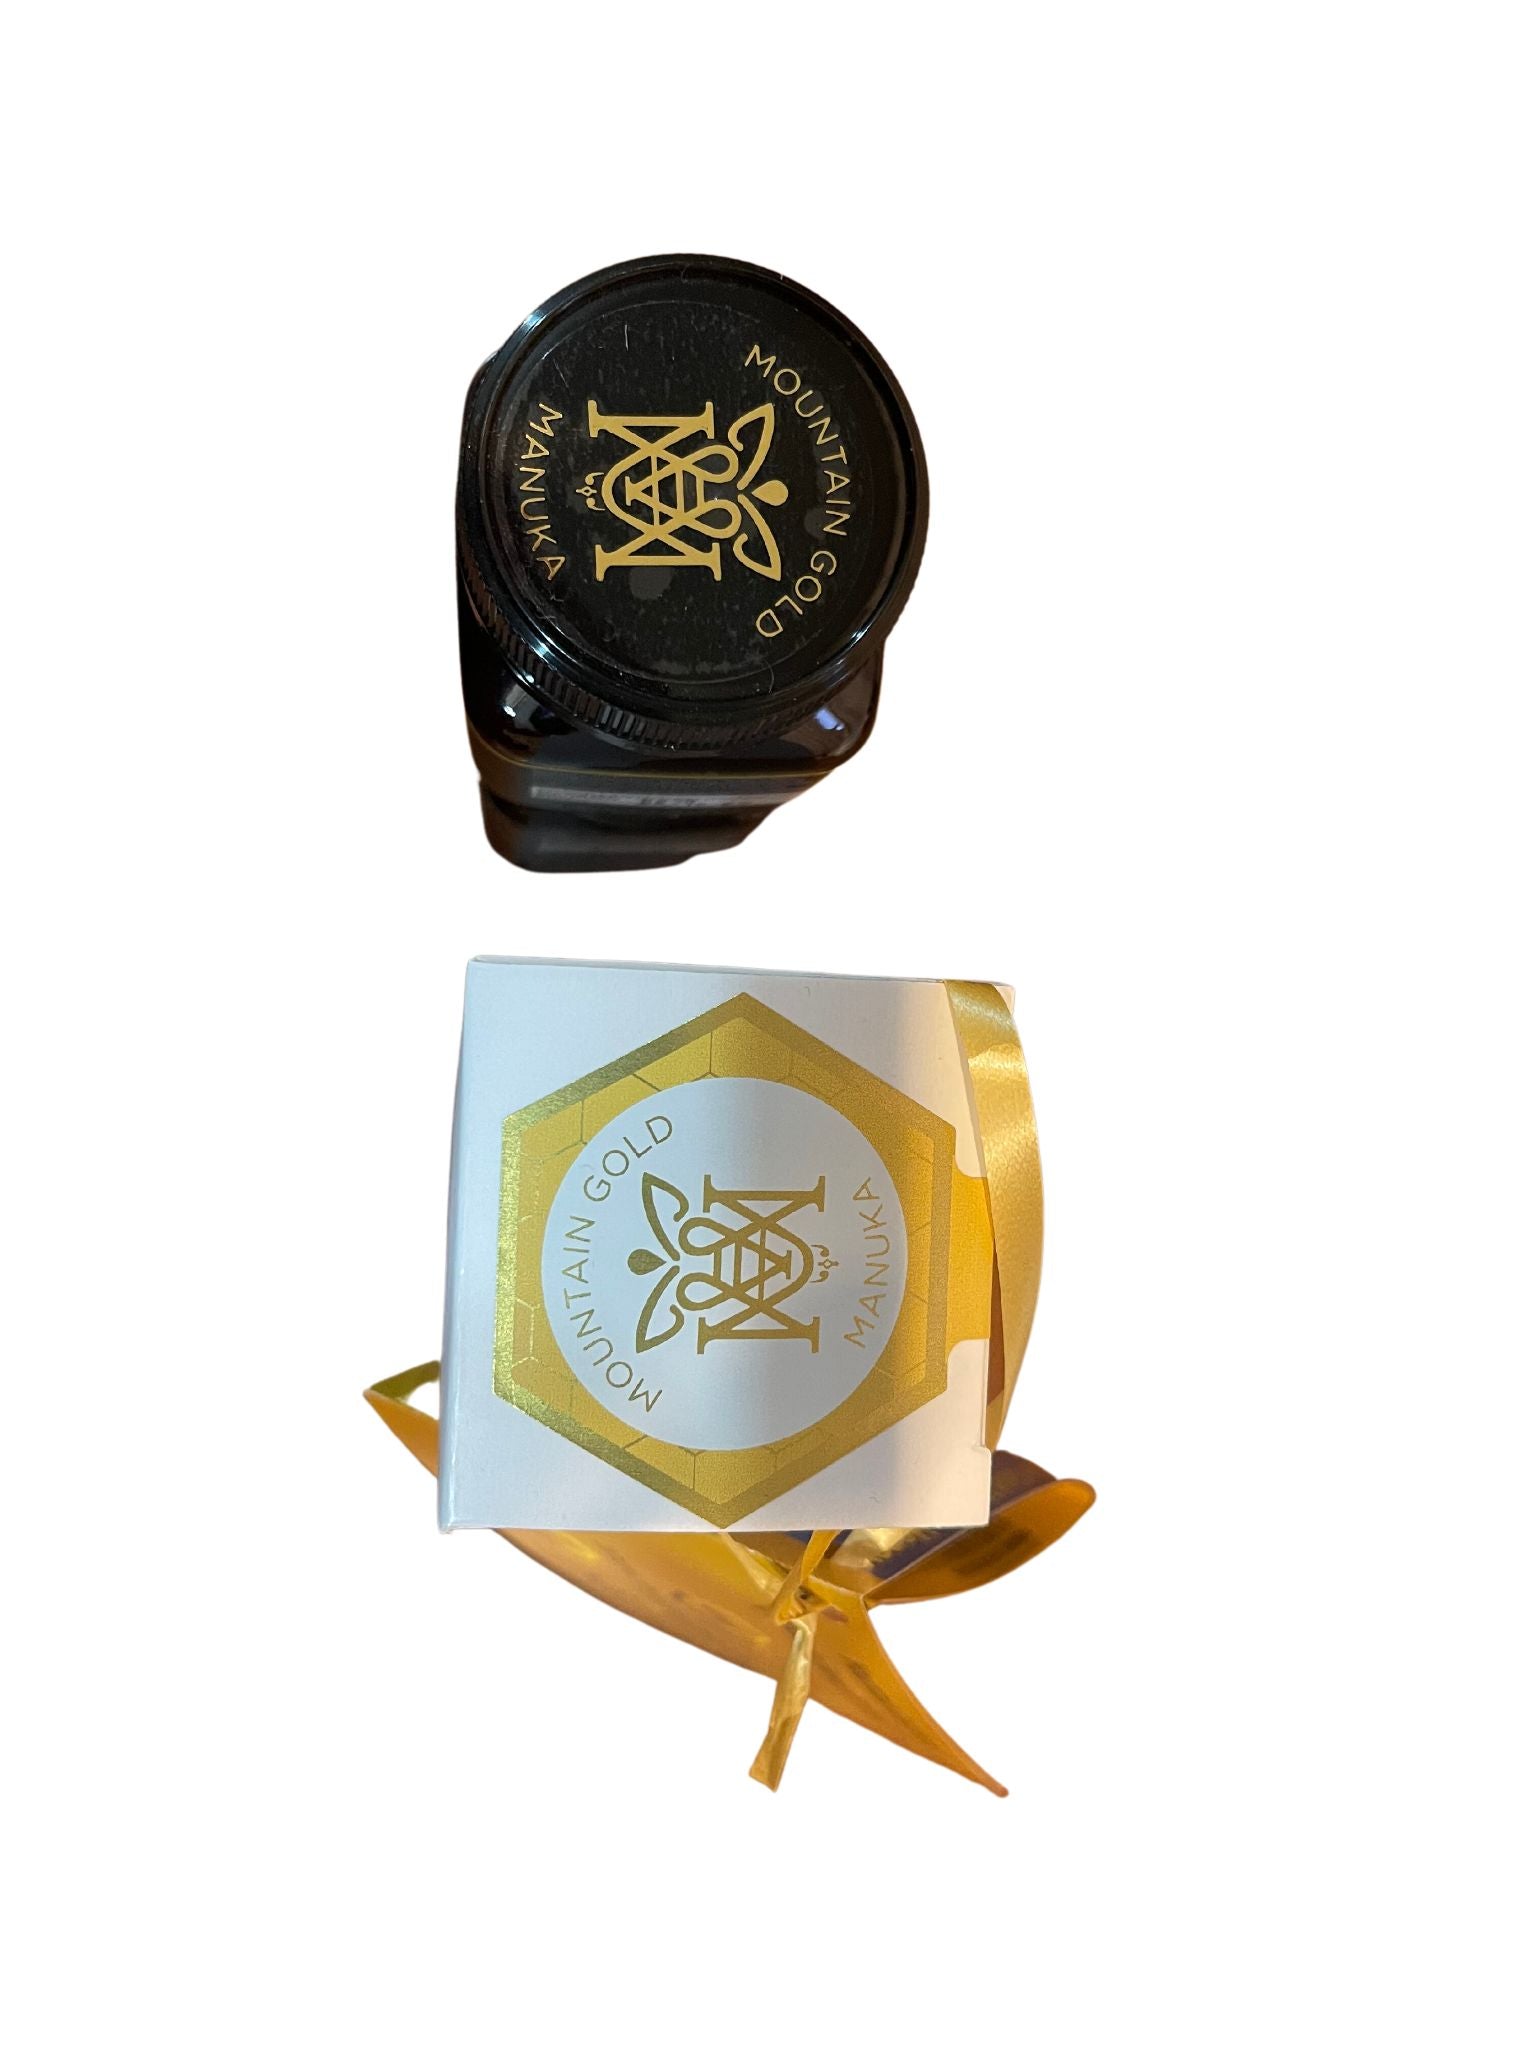 Mountain Gold UMF 5+ Manuka, Southern Rata and Rewarewa Honey Gift Pack